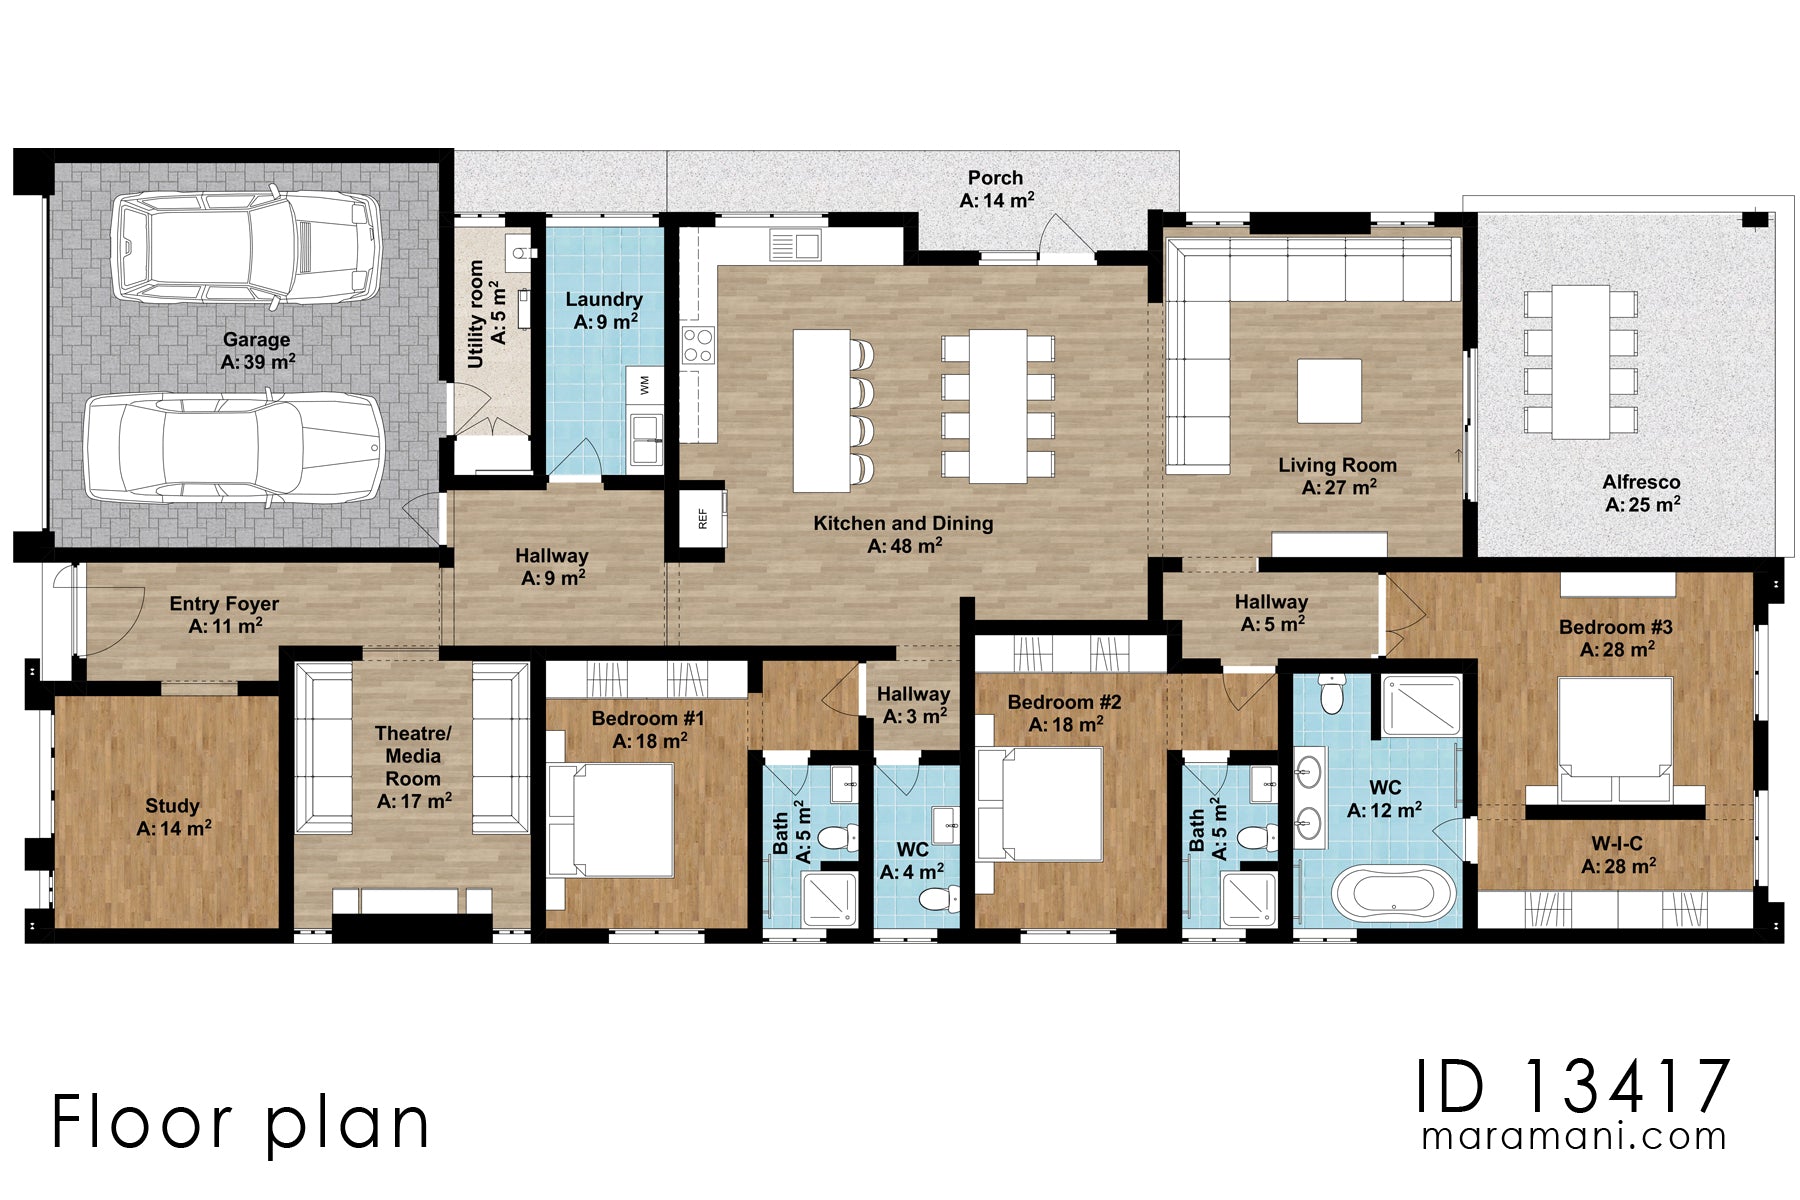 Three bedroom House plan - ID 13417